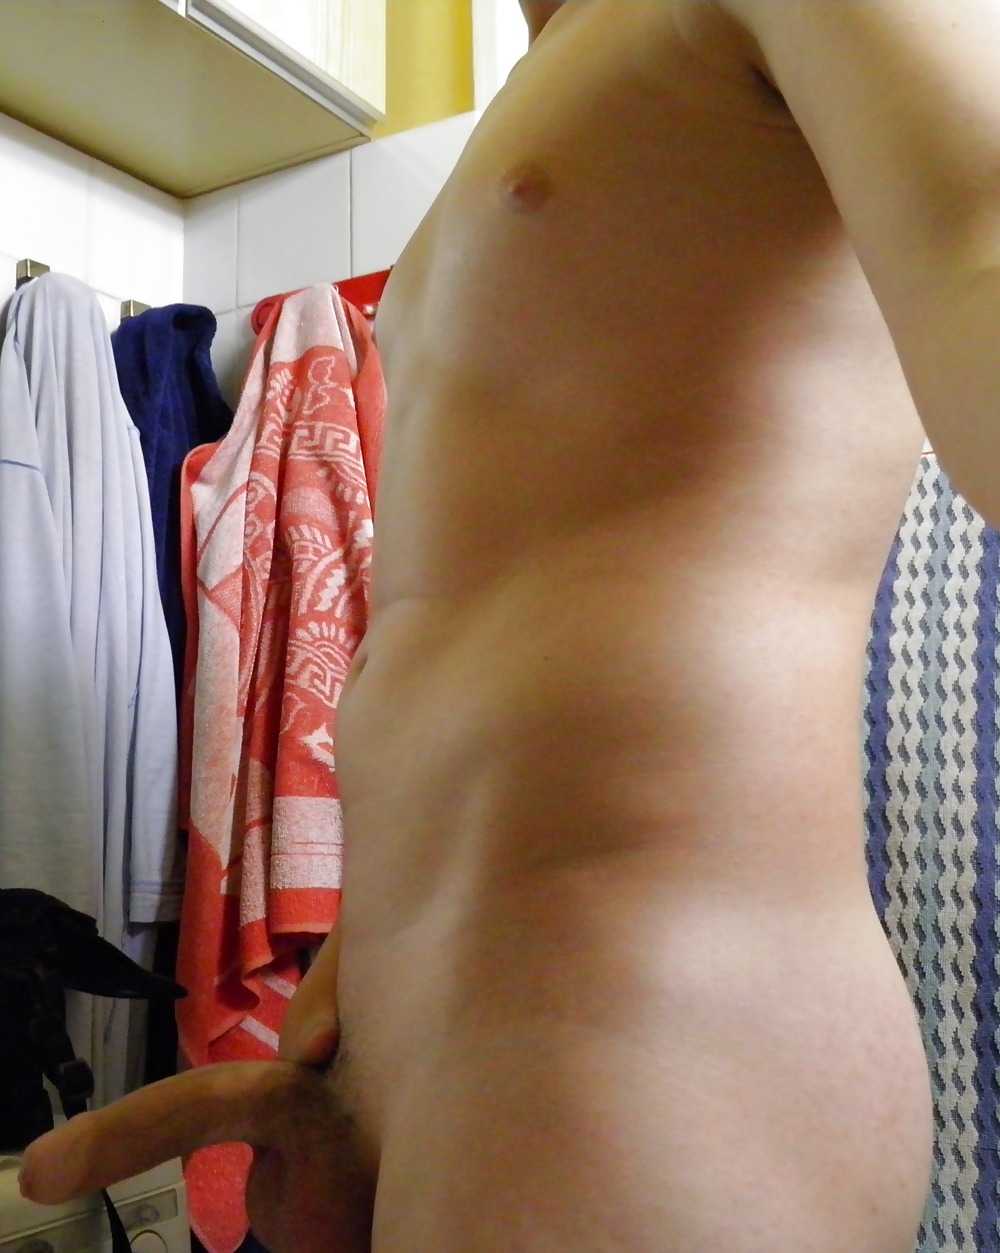 Some pics of my body #8904202